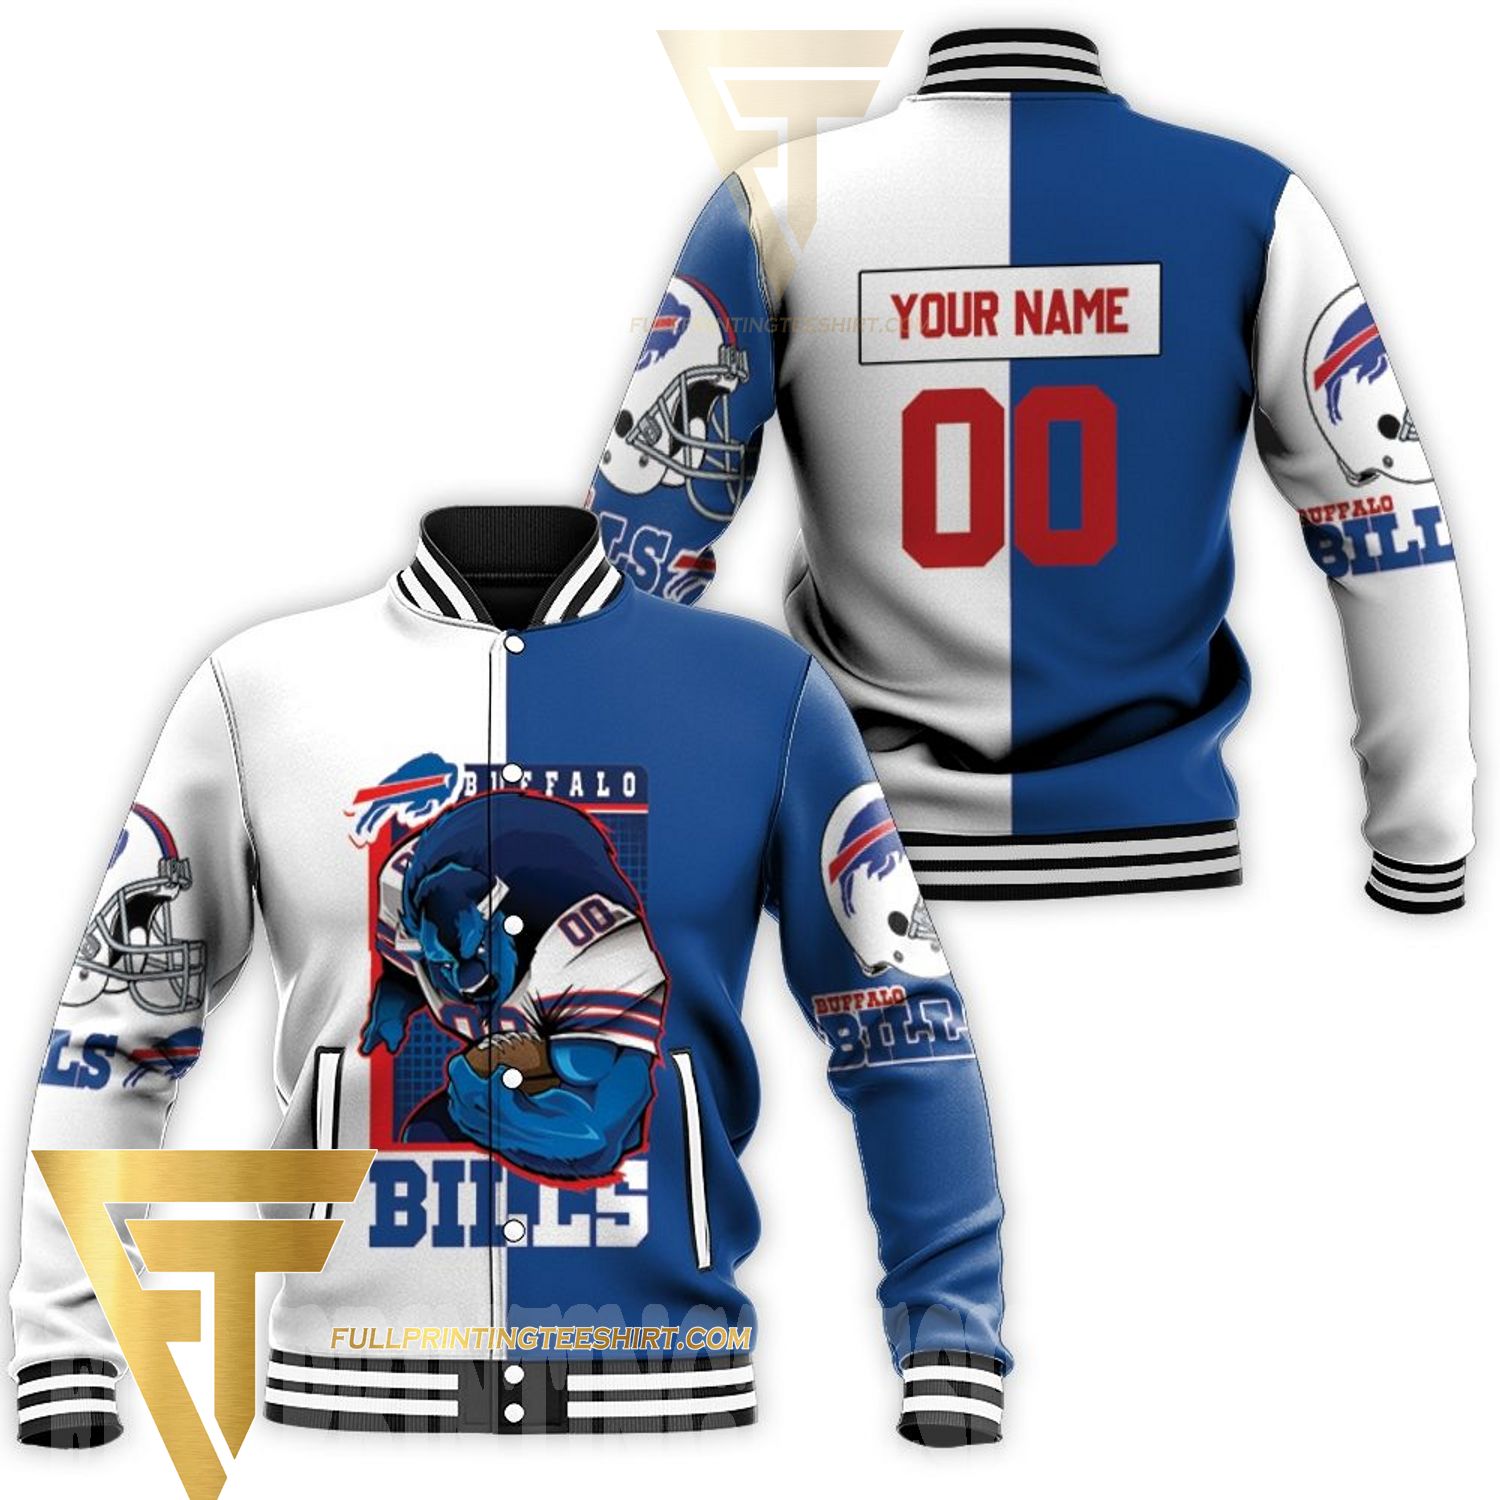 Top-selling item] Buffalo Bills Mascot 2020 Afc East Champions